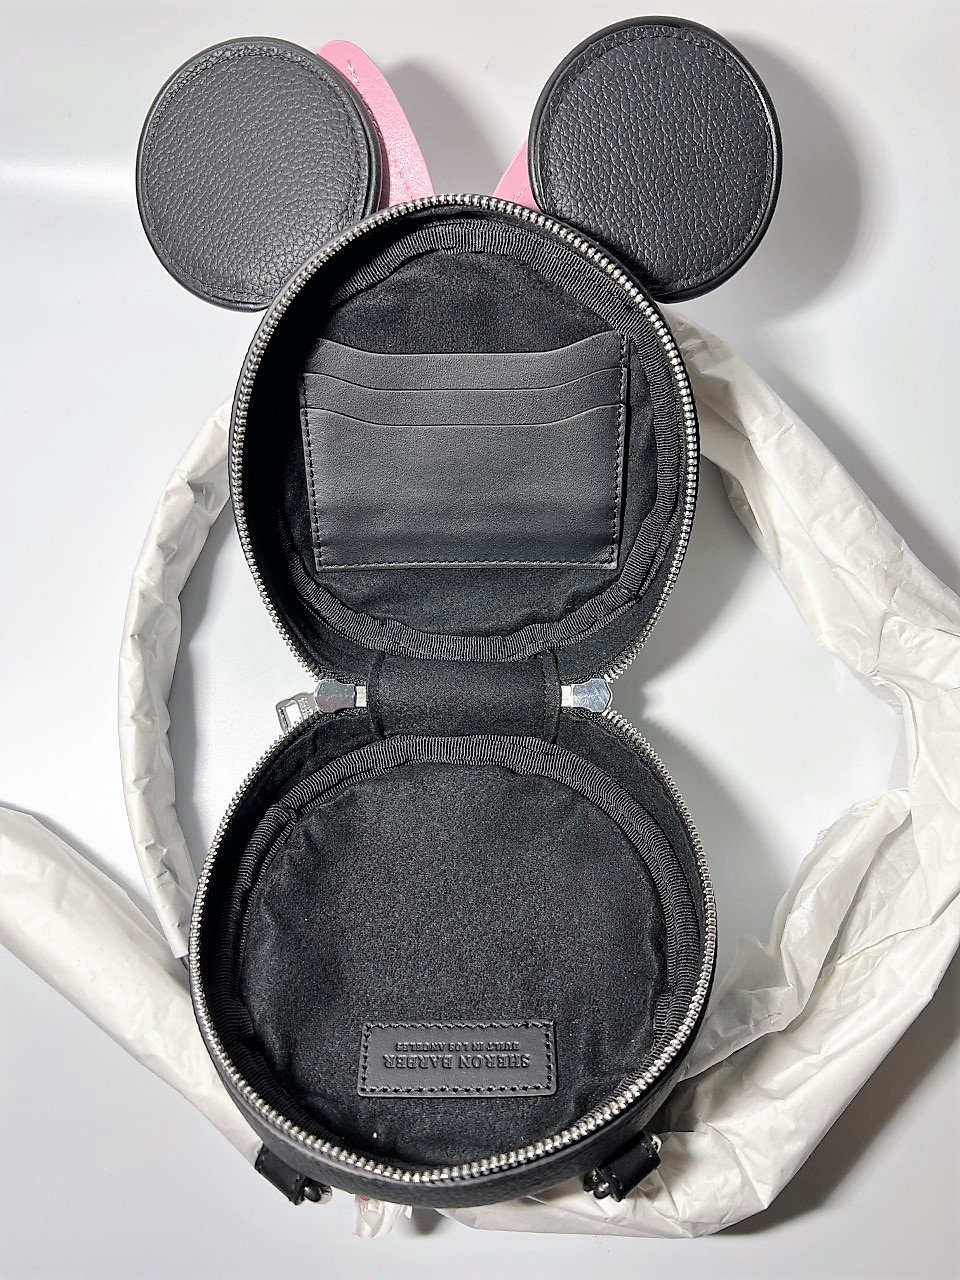 NTWRK Exclusive Sheron Barber Black Minnie Mouse Crossbody Bag Purse BRAND  NEW!